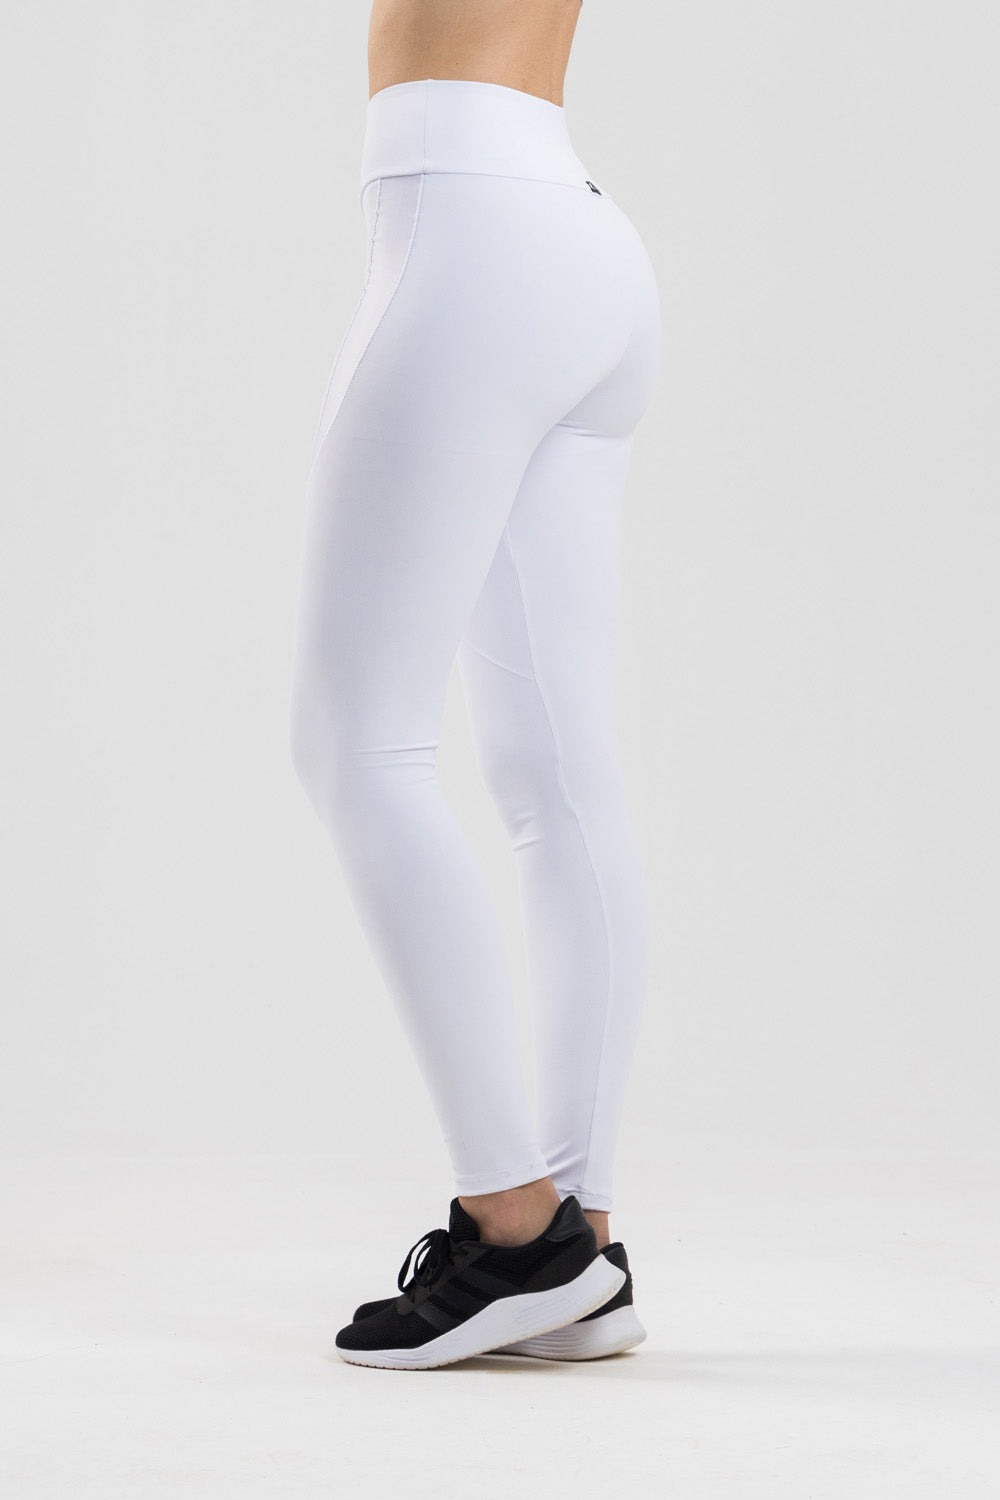 Fashion Leggings White, Finally Available!